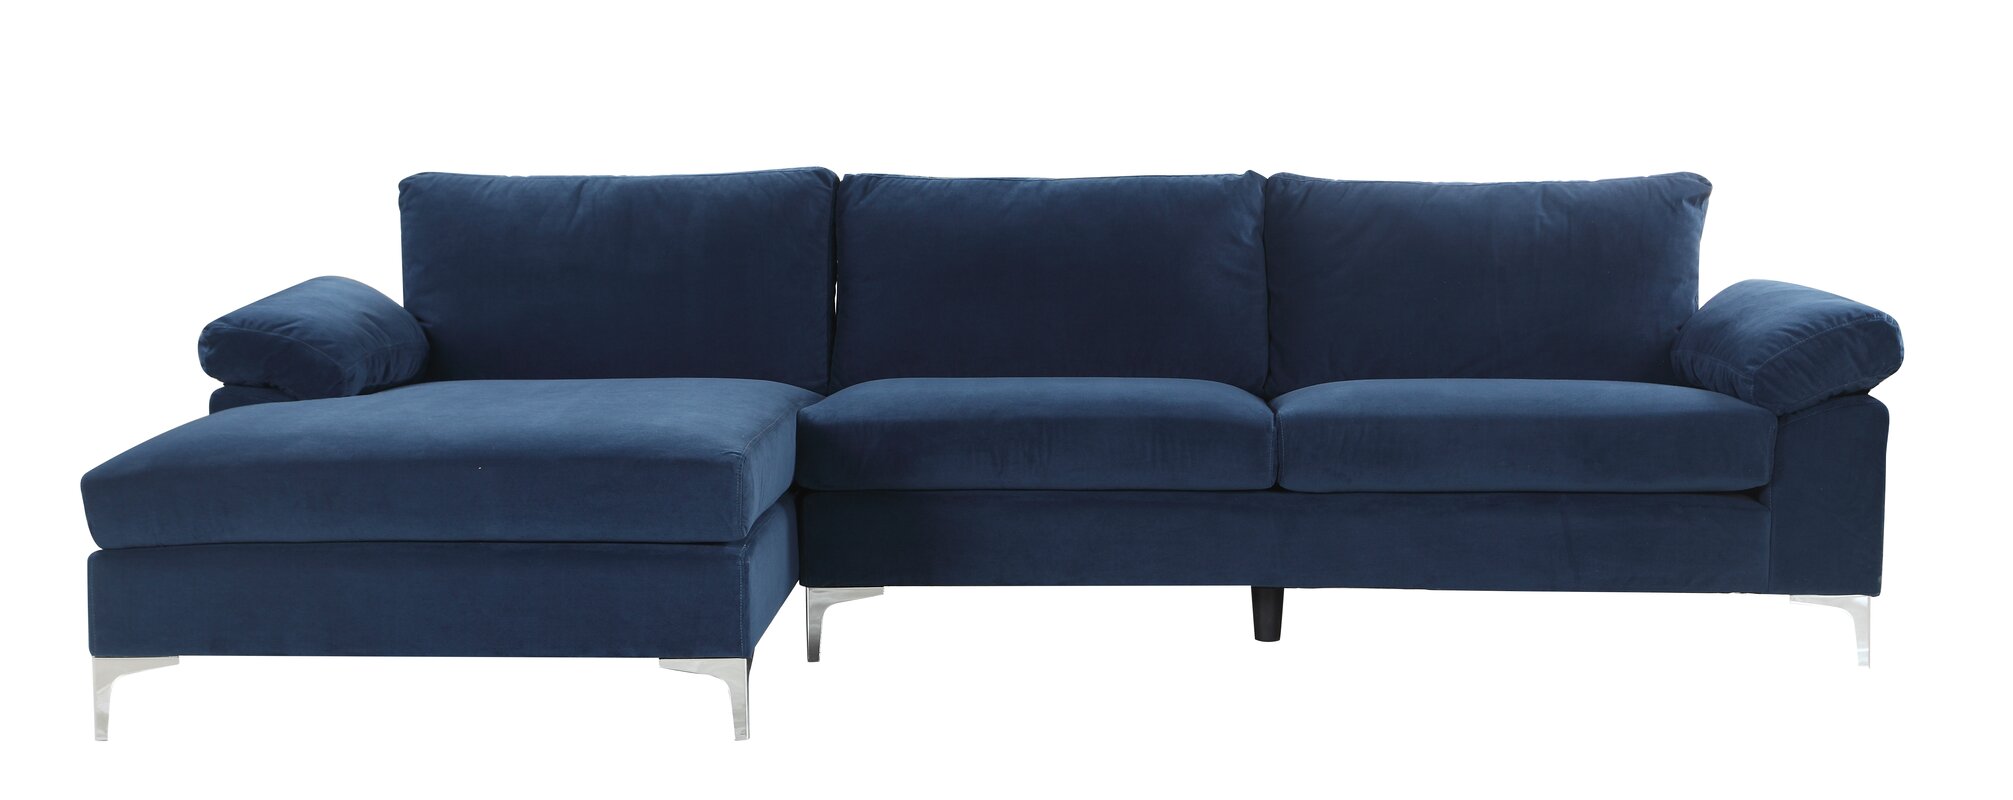 Remm Modern Sectional Sofa